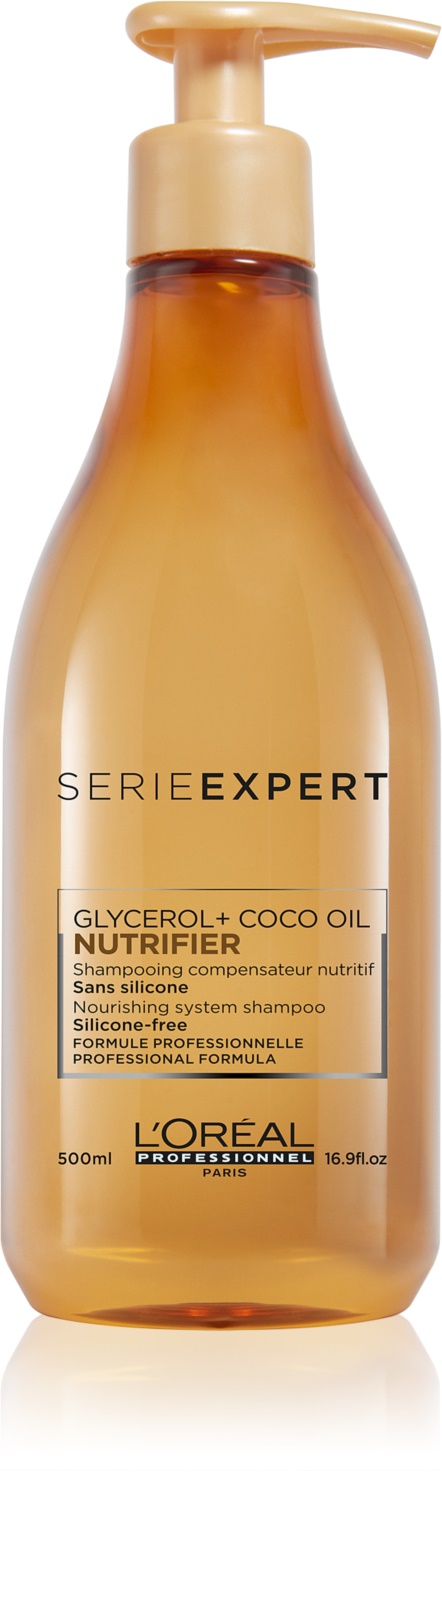 L'ORÉAL Serie Expert Glycerol+Coco Oil Nutrifier Shampoo 500 ml